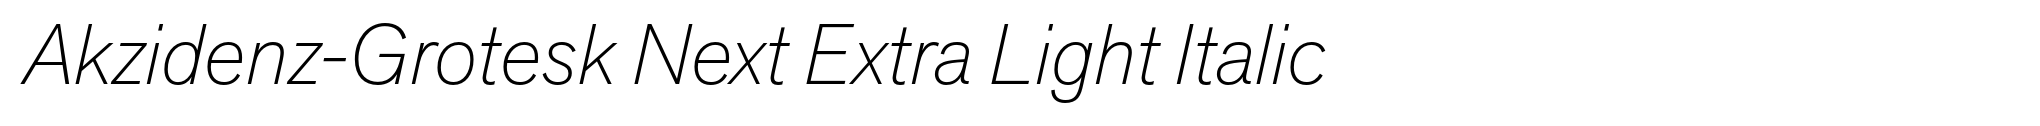 Akzidenz-Grotesk Next Extra Light Italic image